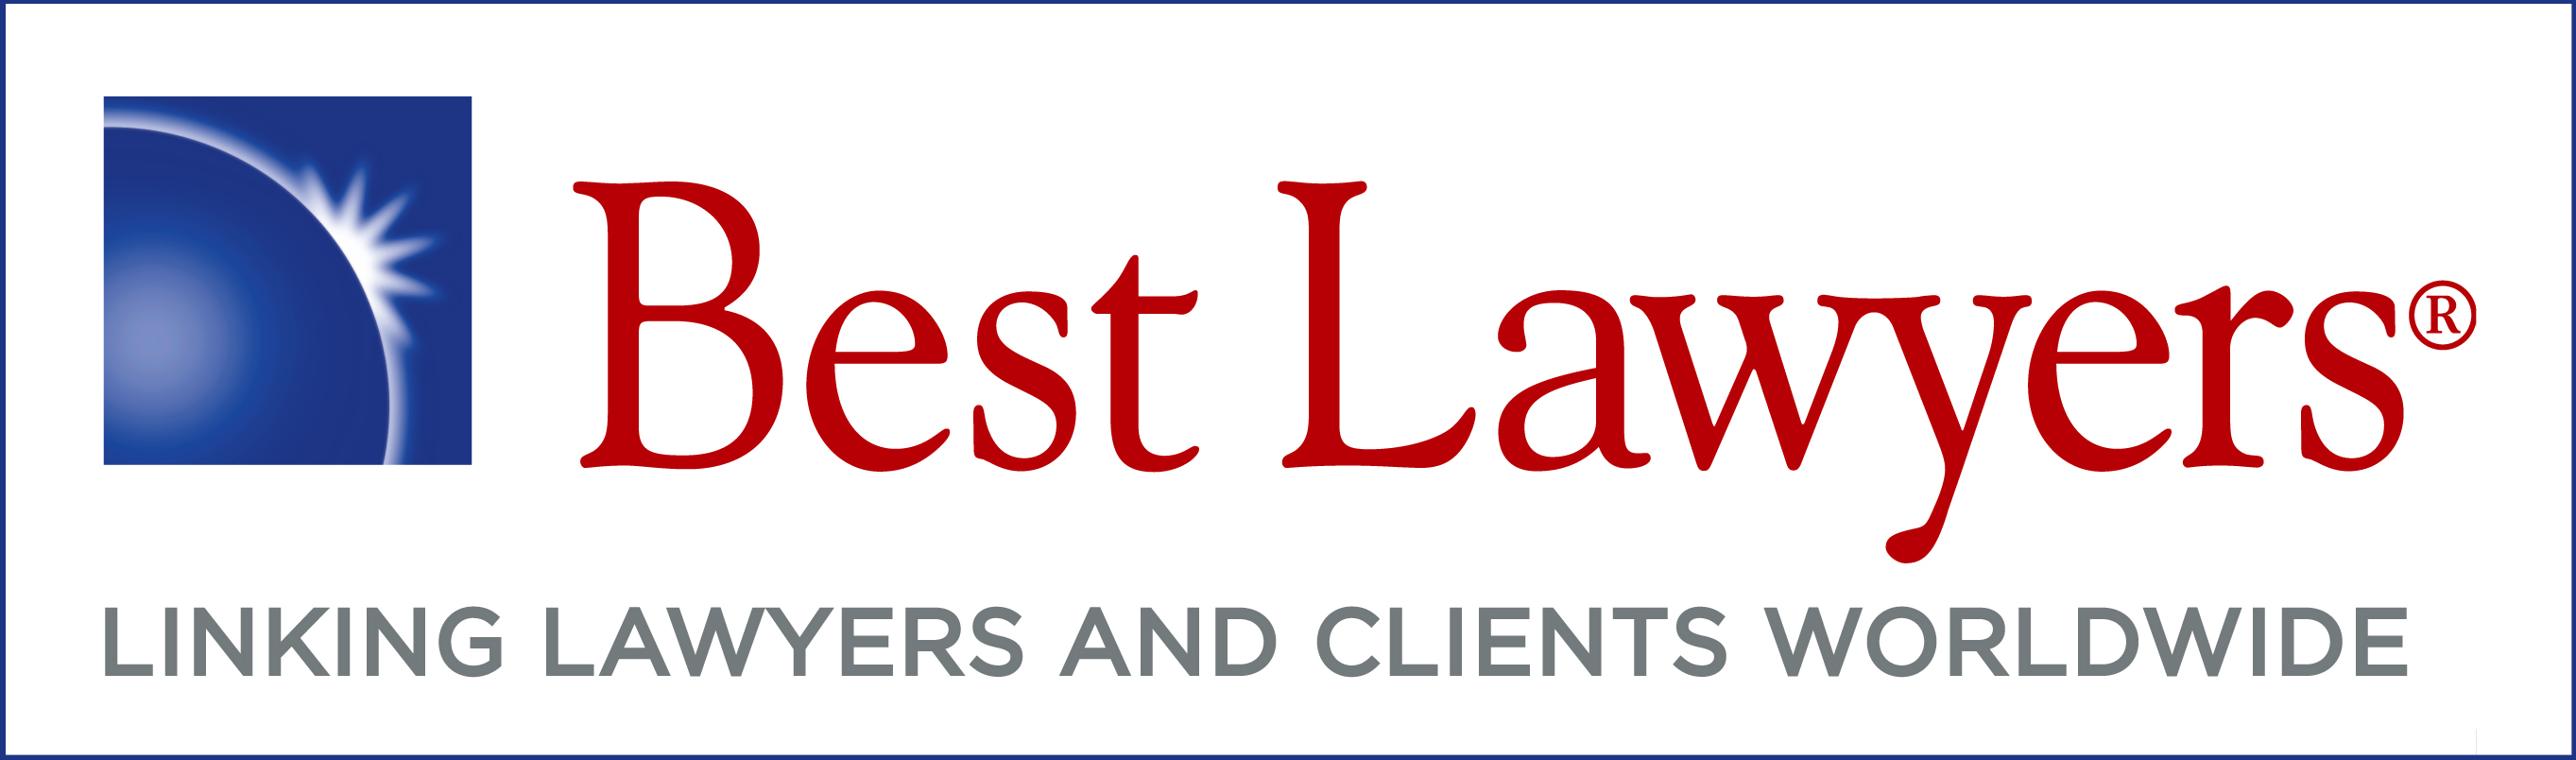 Best Lawyer in America - Family Law Mediation